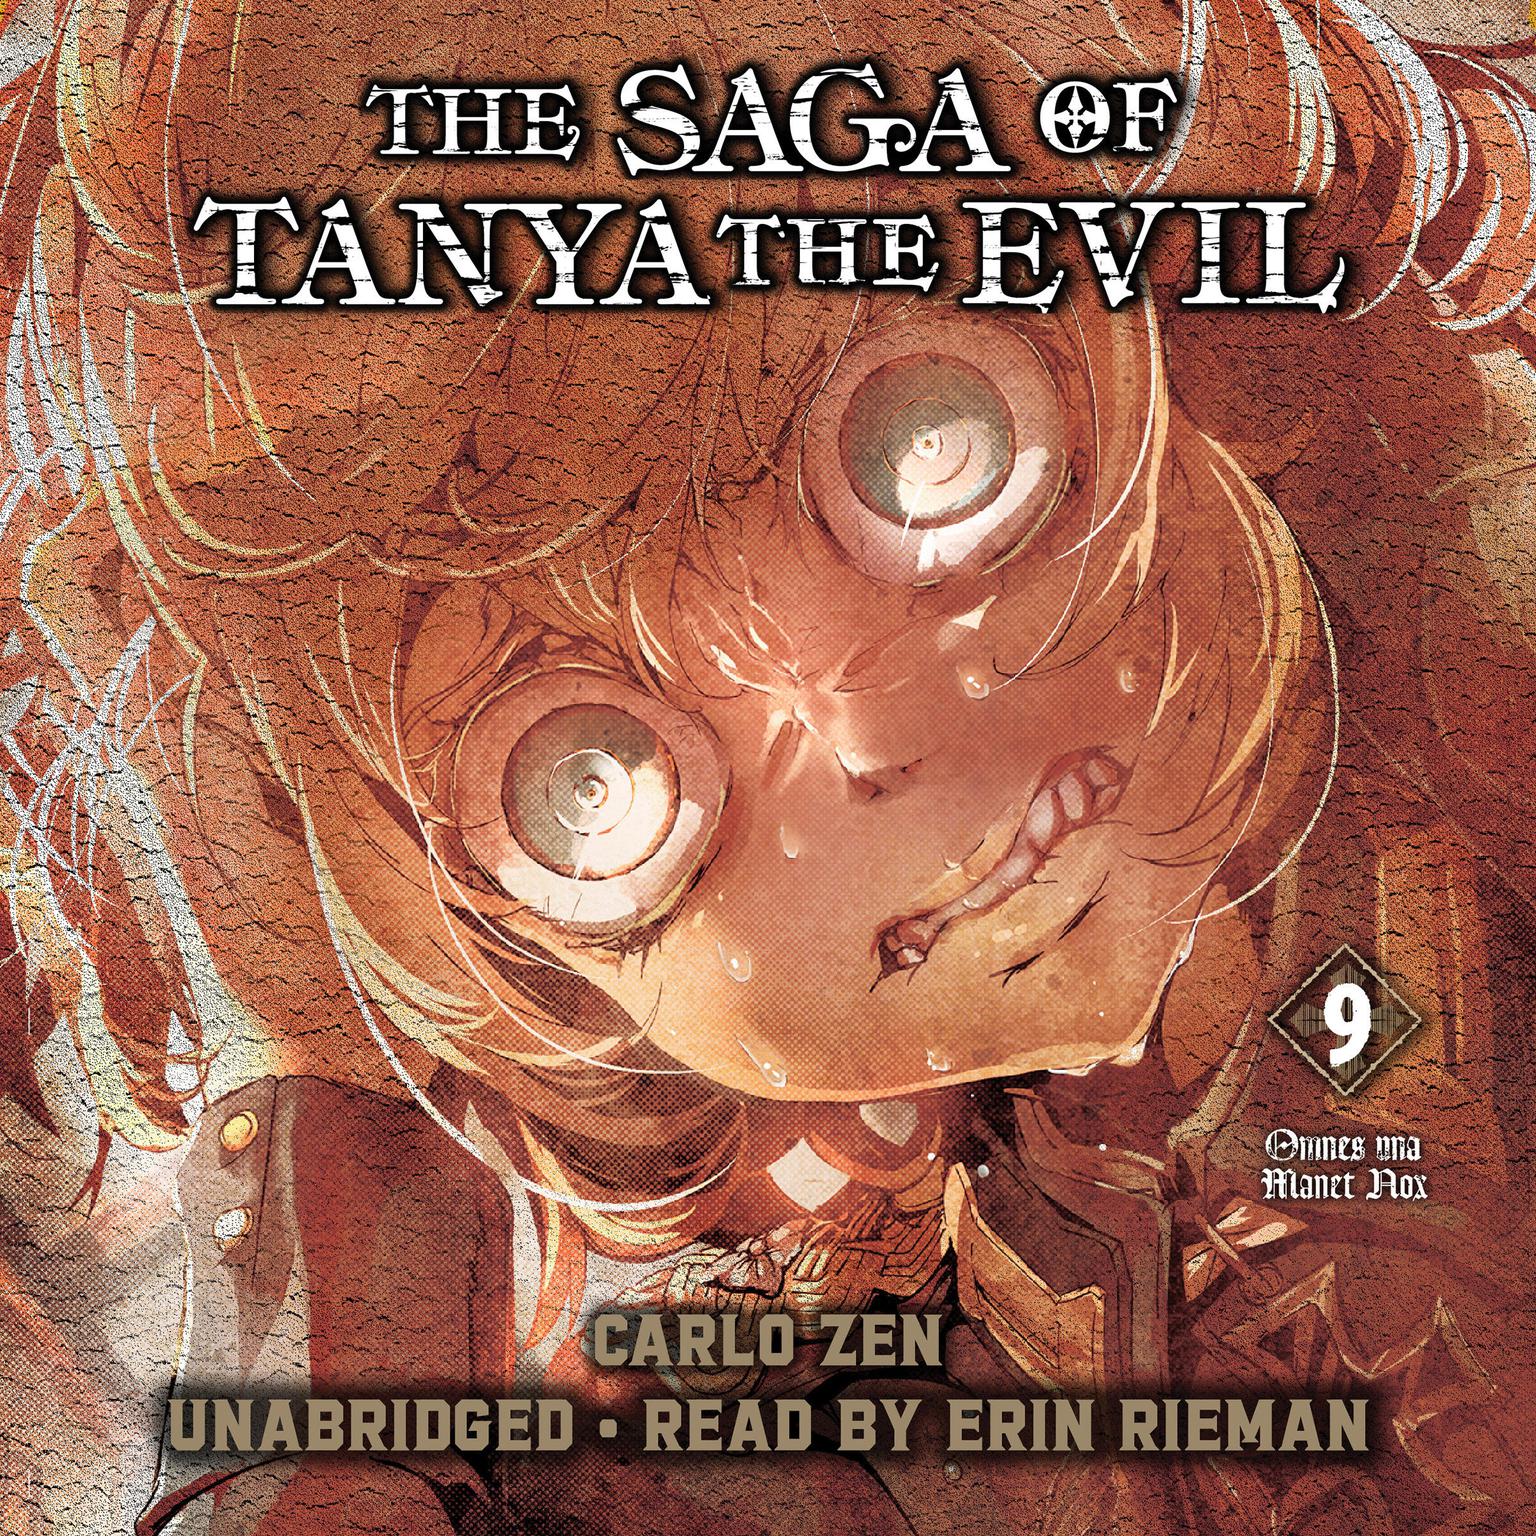 The Saga of Tanya the Evil, Vol. 9: Omnes una Manet Nox Audiobook, by Carlo Zen